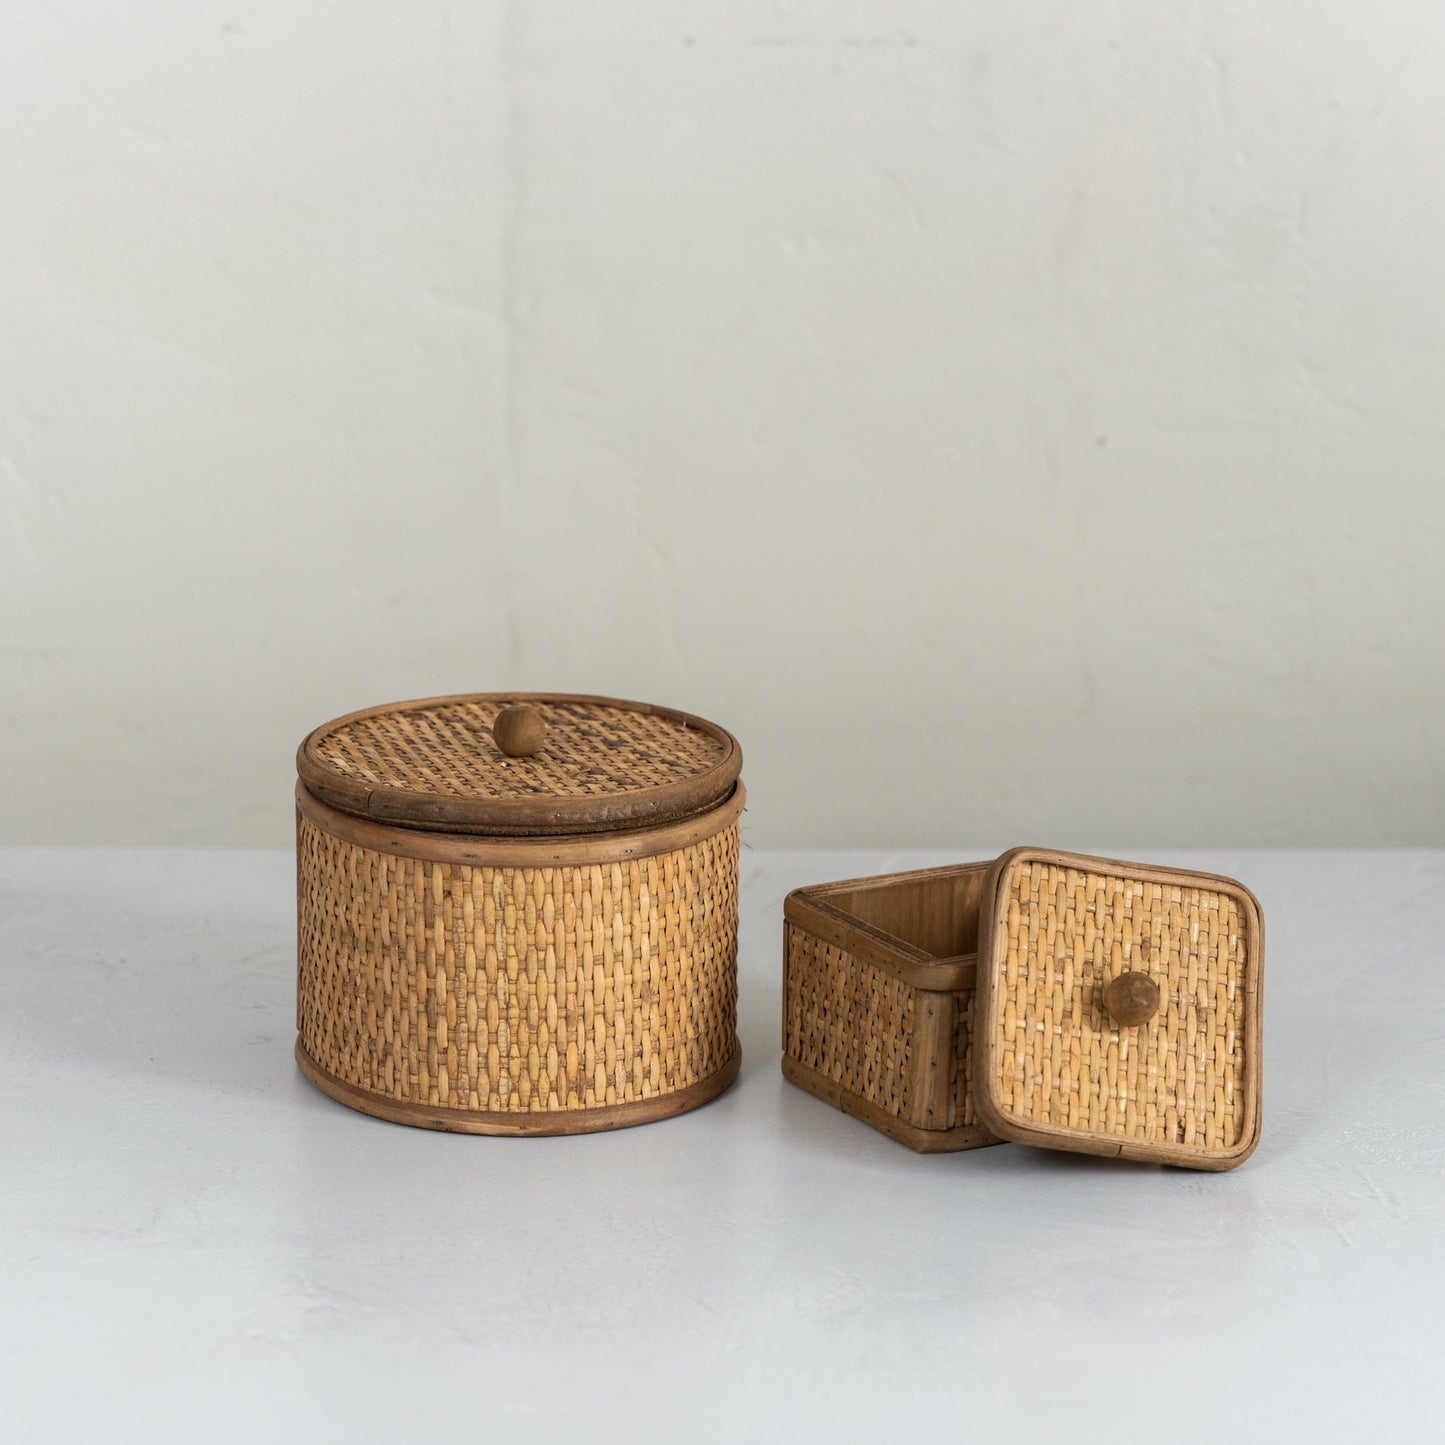 Woven Cane Box, 2 Styles